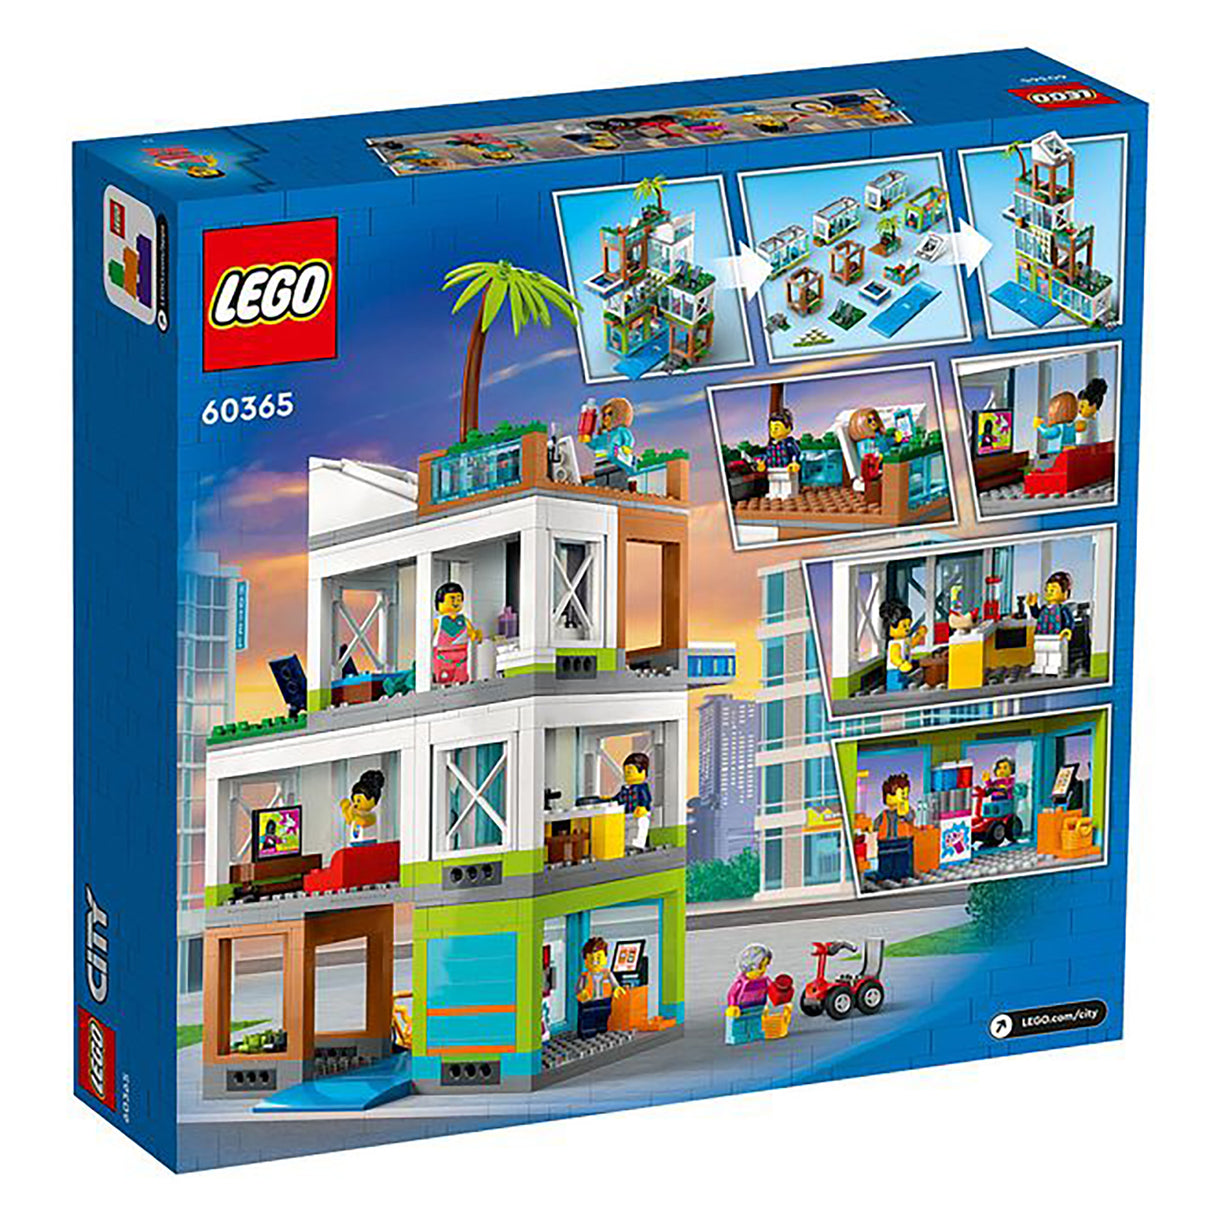 LEGO City Apartment Building 60365 (688 pieces)